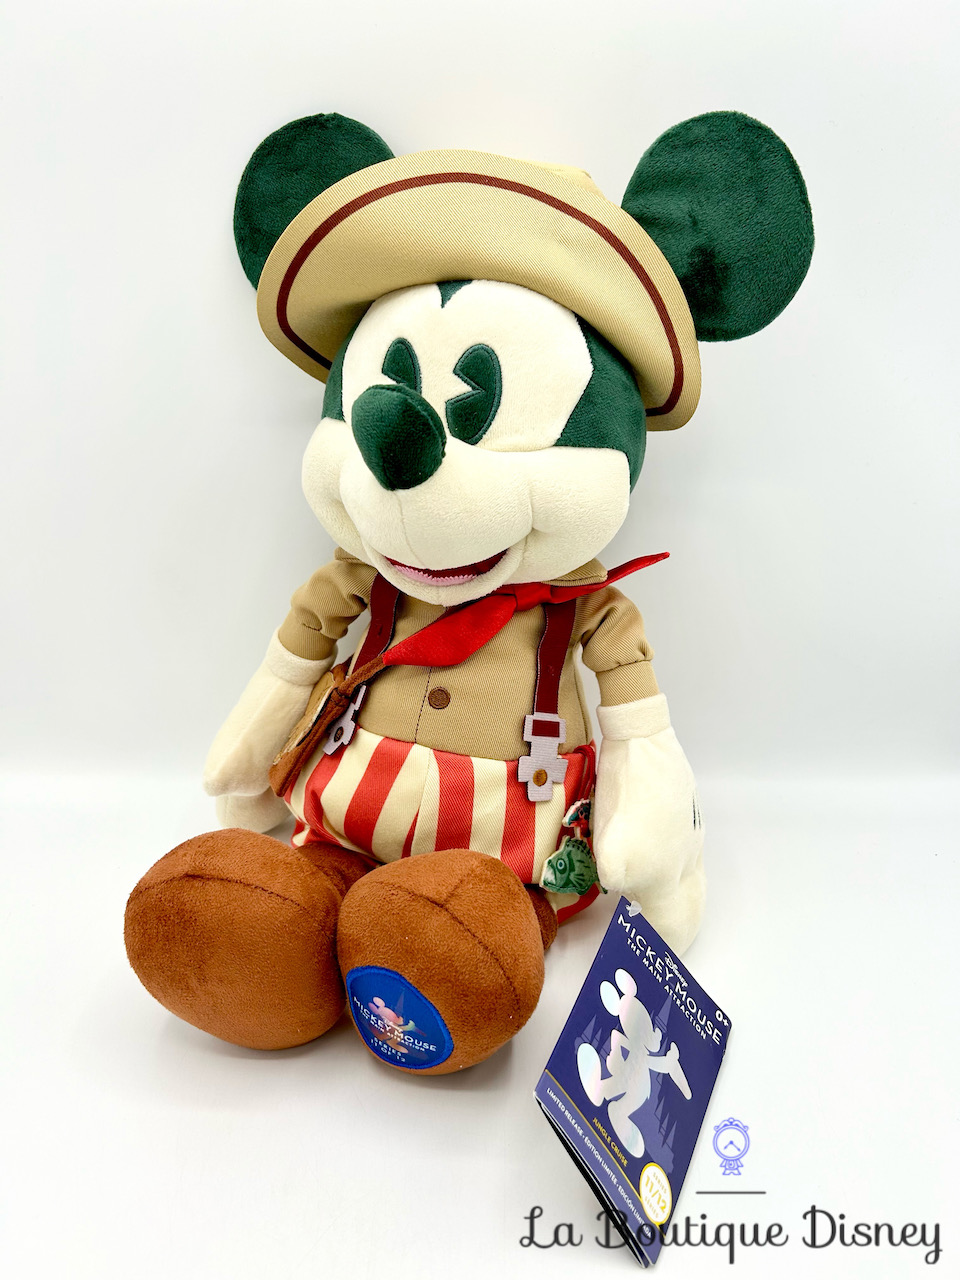 Peluche Mickey Mouse The Main Attraction 11 sur 12 Jungle Cruise Disney Store 2022 Édition limitée 44 cm